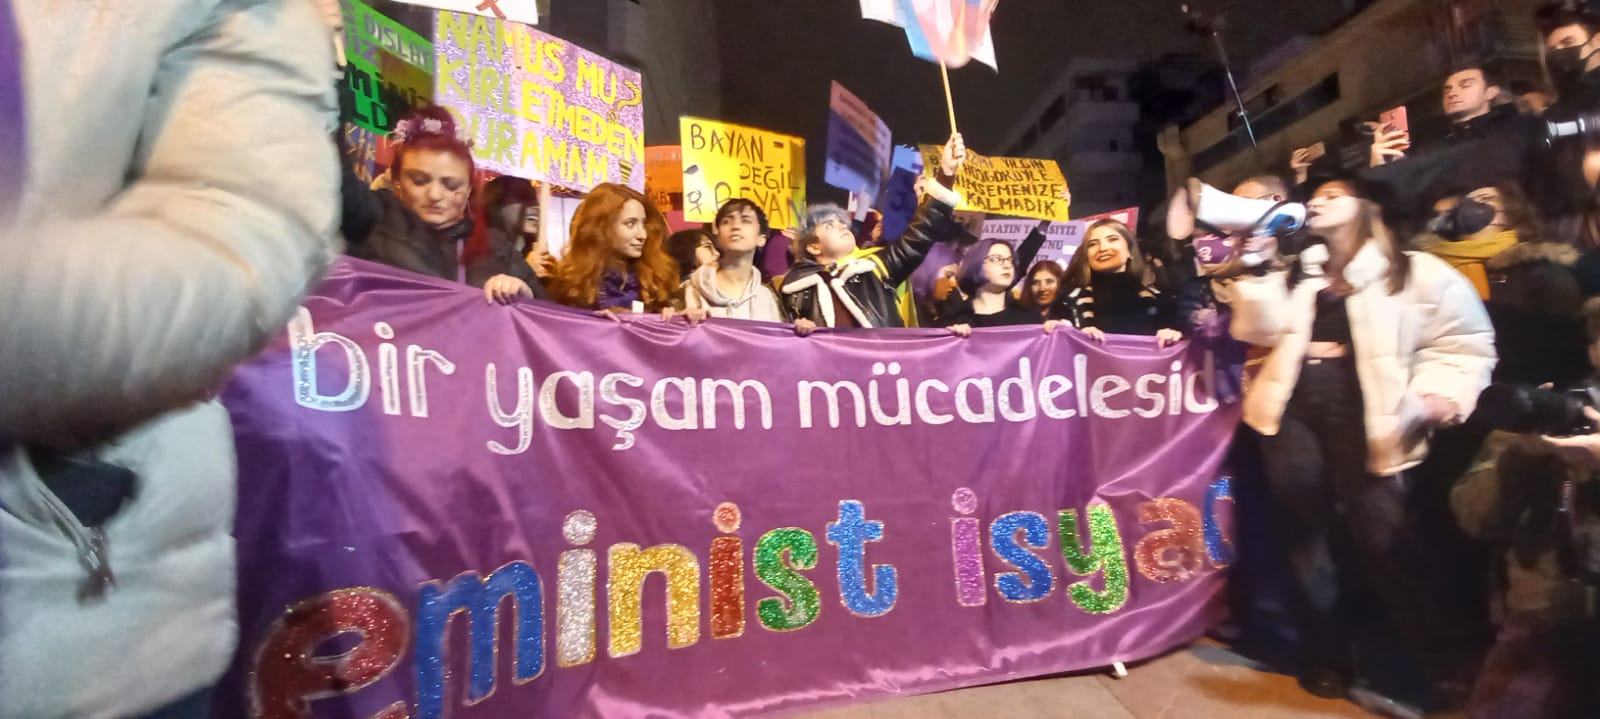 Bu bir yaşam mücadelesidir: Feminist isyandayız! Kaos GL - LGBTİ+ Haber Portalı